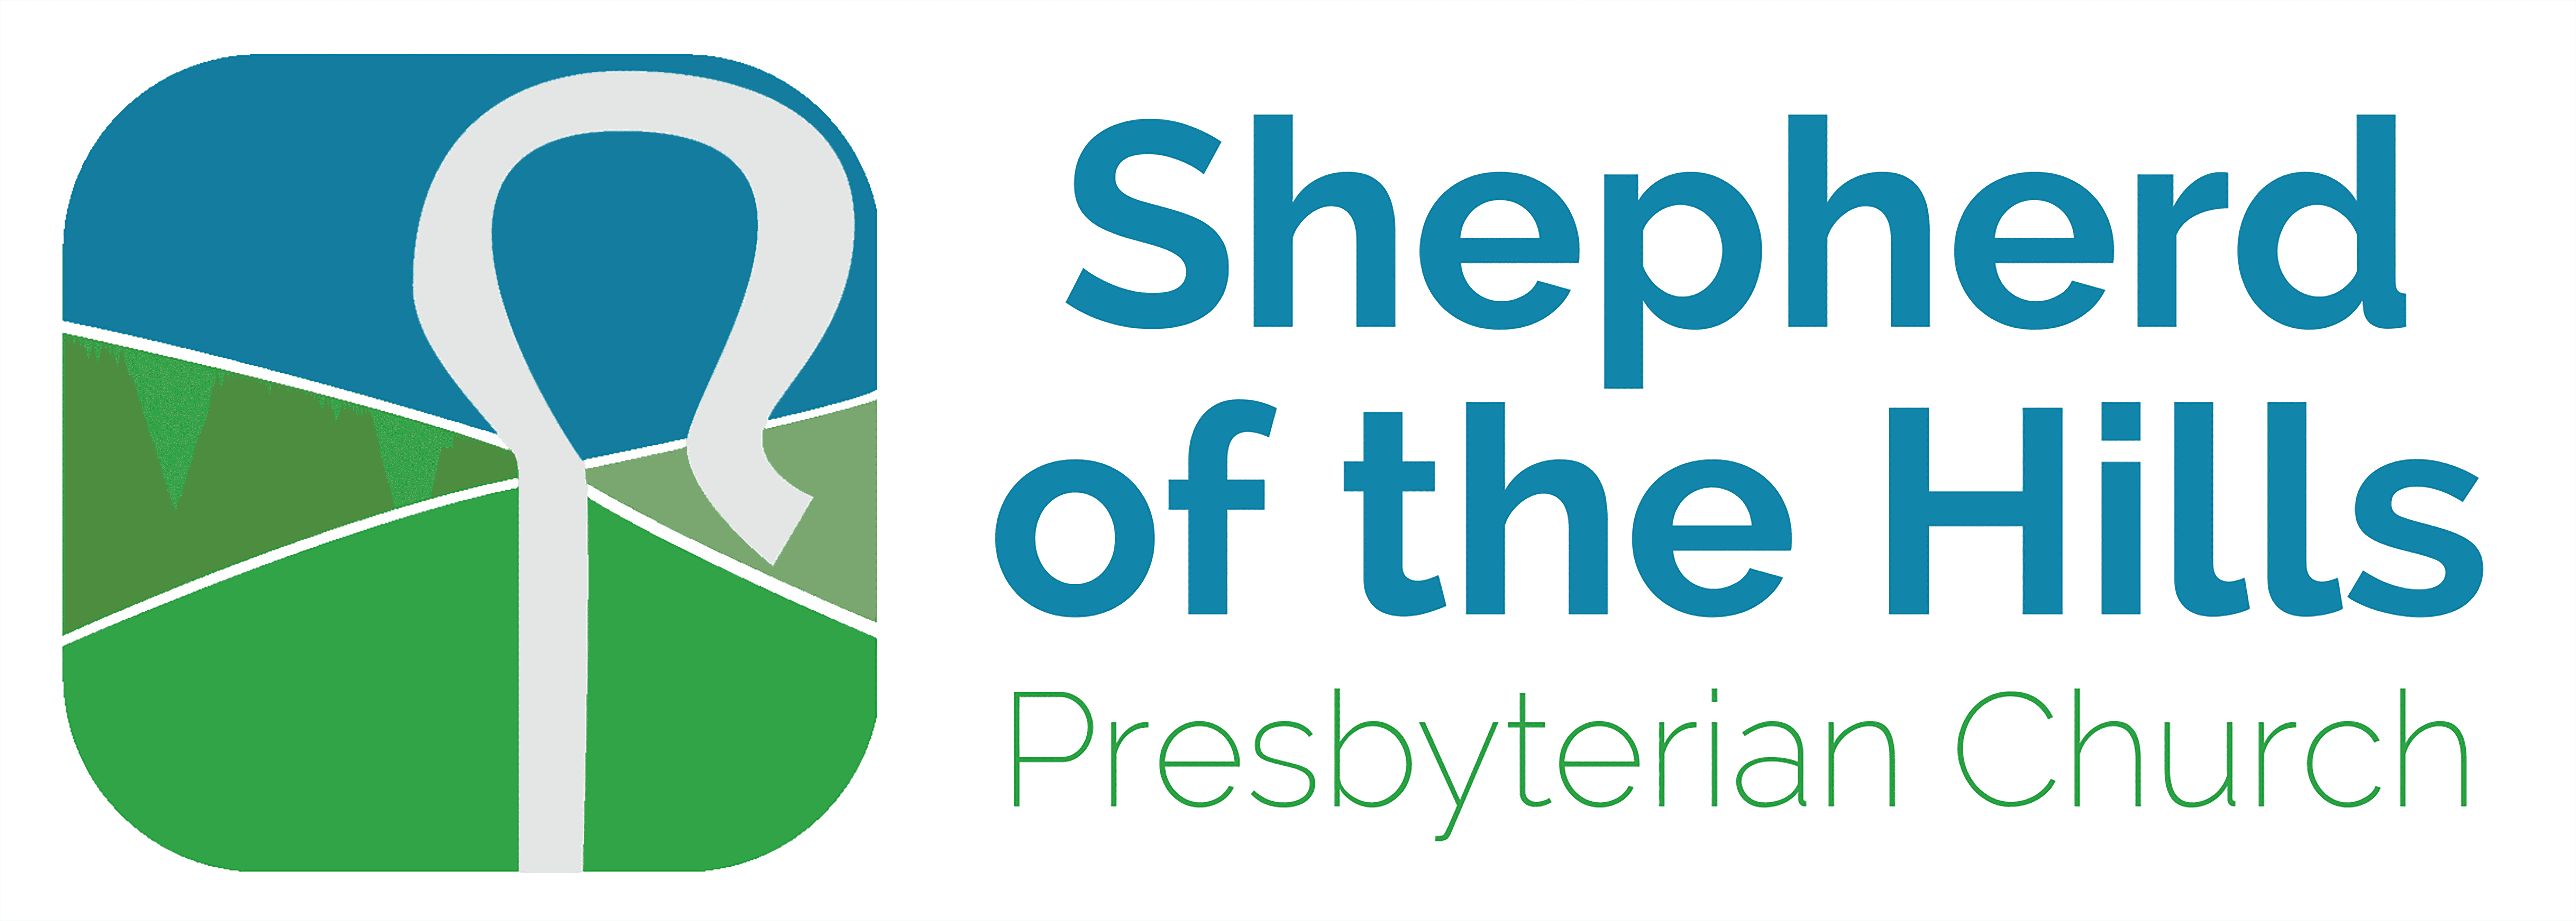 Shepherd of the Hills Presbyterian Church